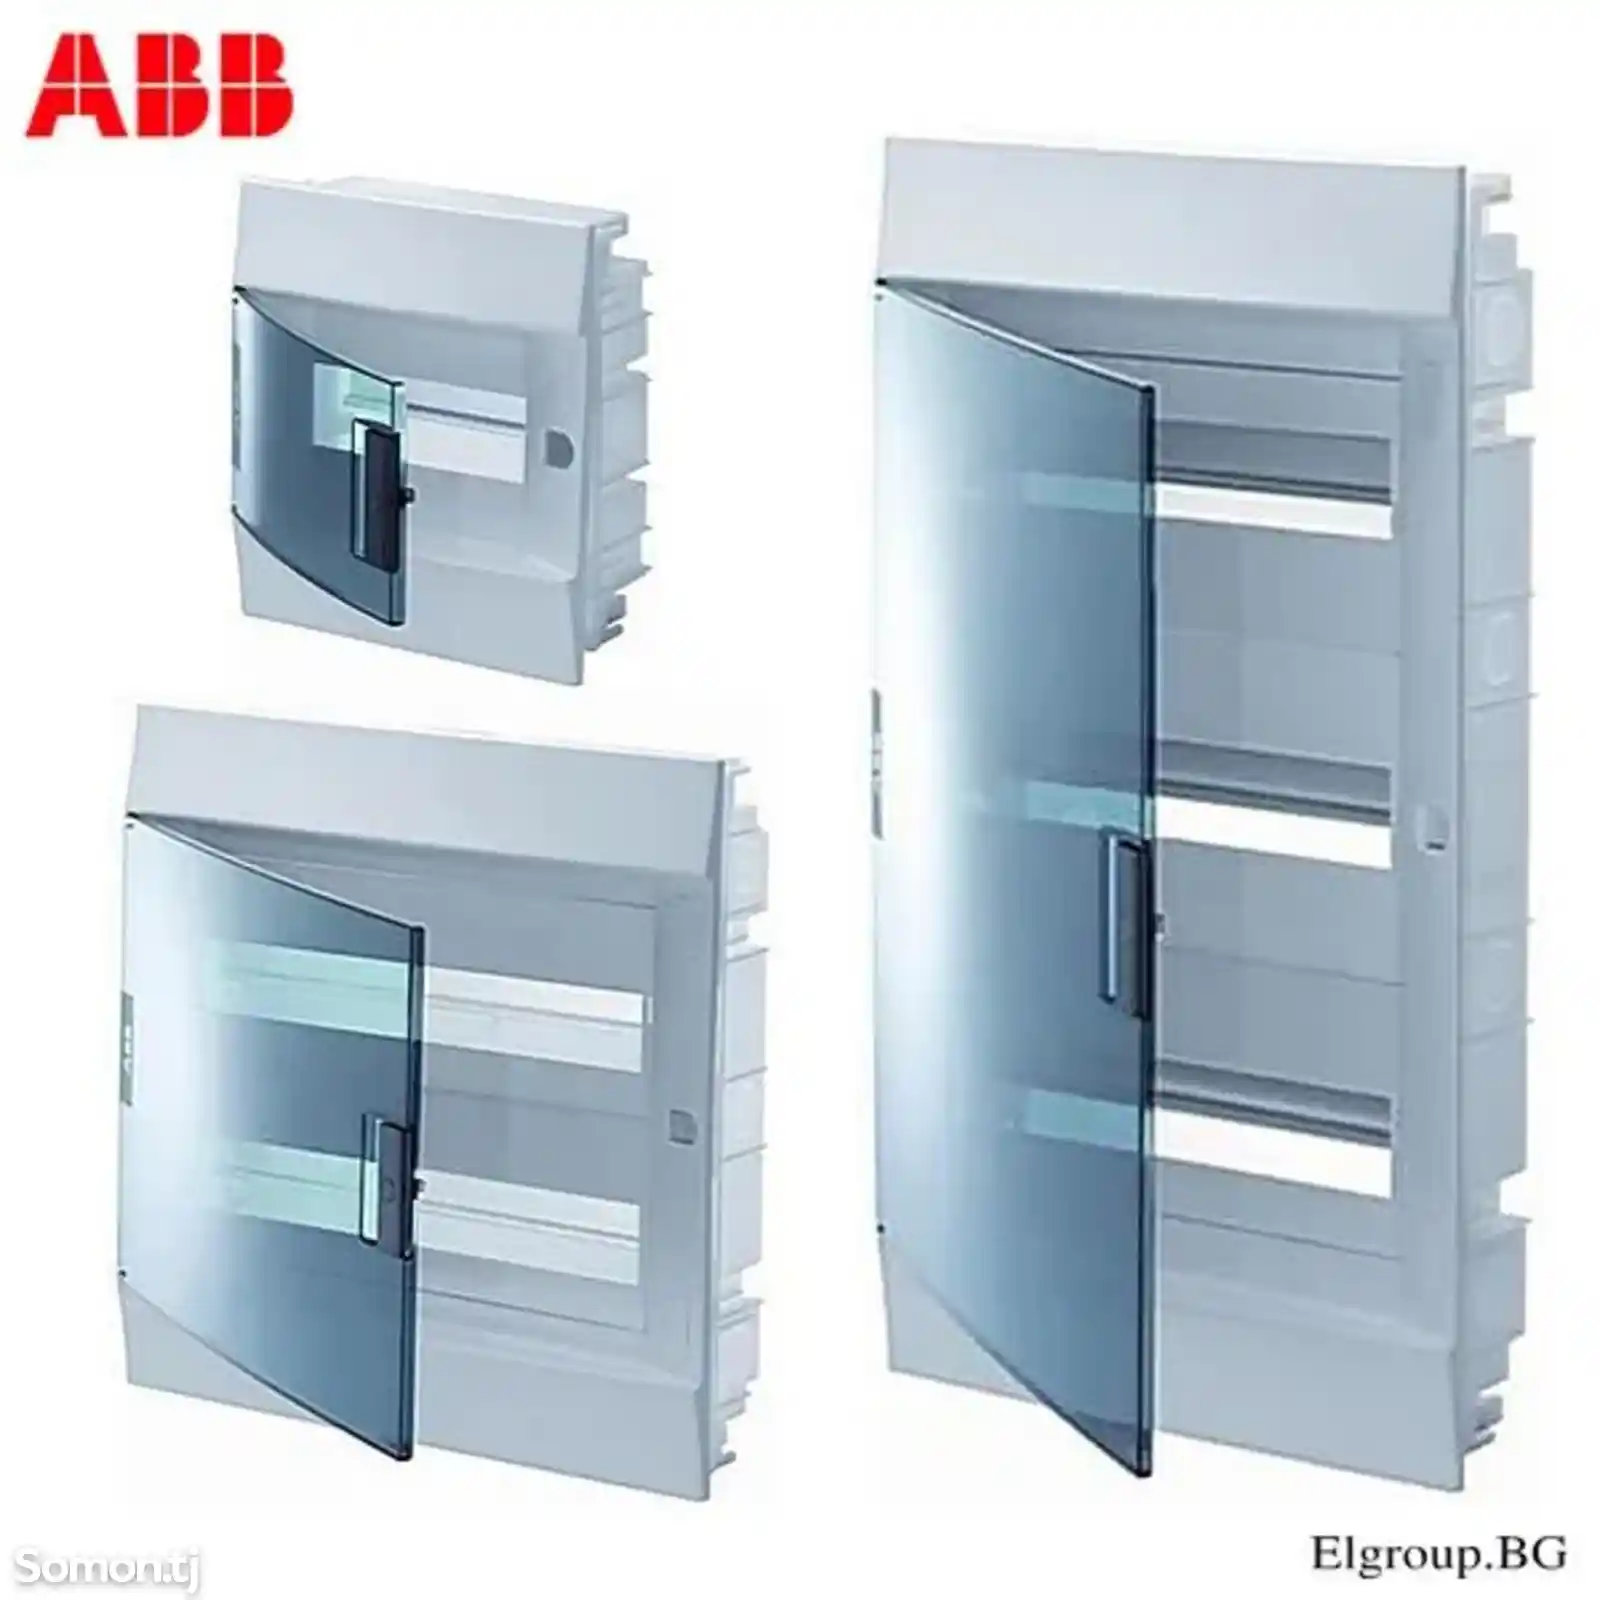 Щит ABB Basic E для скрытого монтажа, прозрачная серая дверь, 36 модул-1